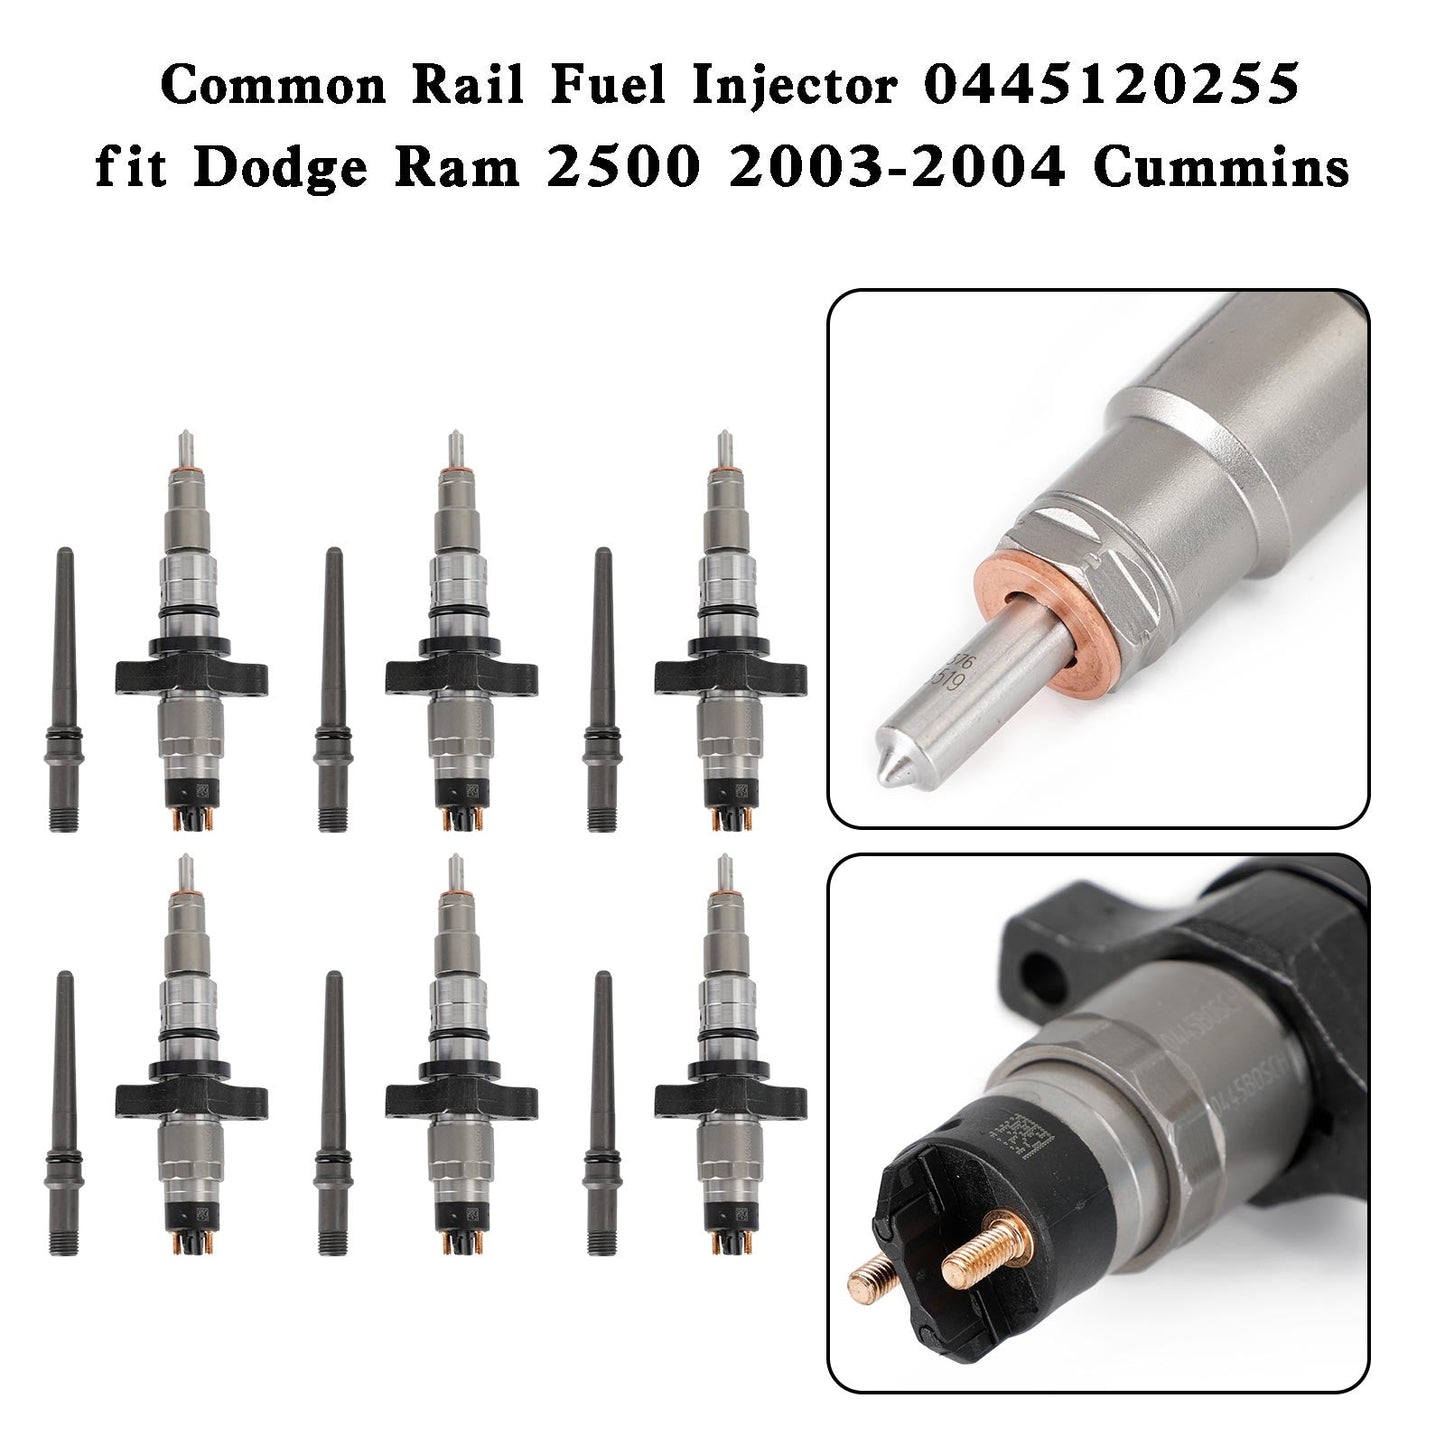 1PCS Common Rail Fuel Injector 0445120255 fit Dodge Ram 2500 2003-2004 Cummins